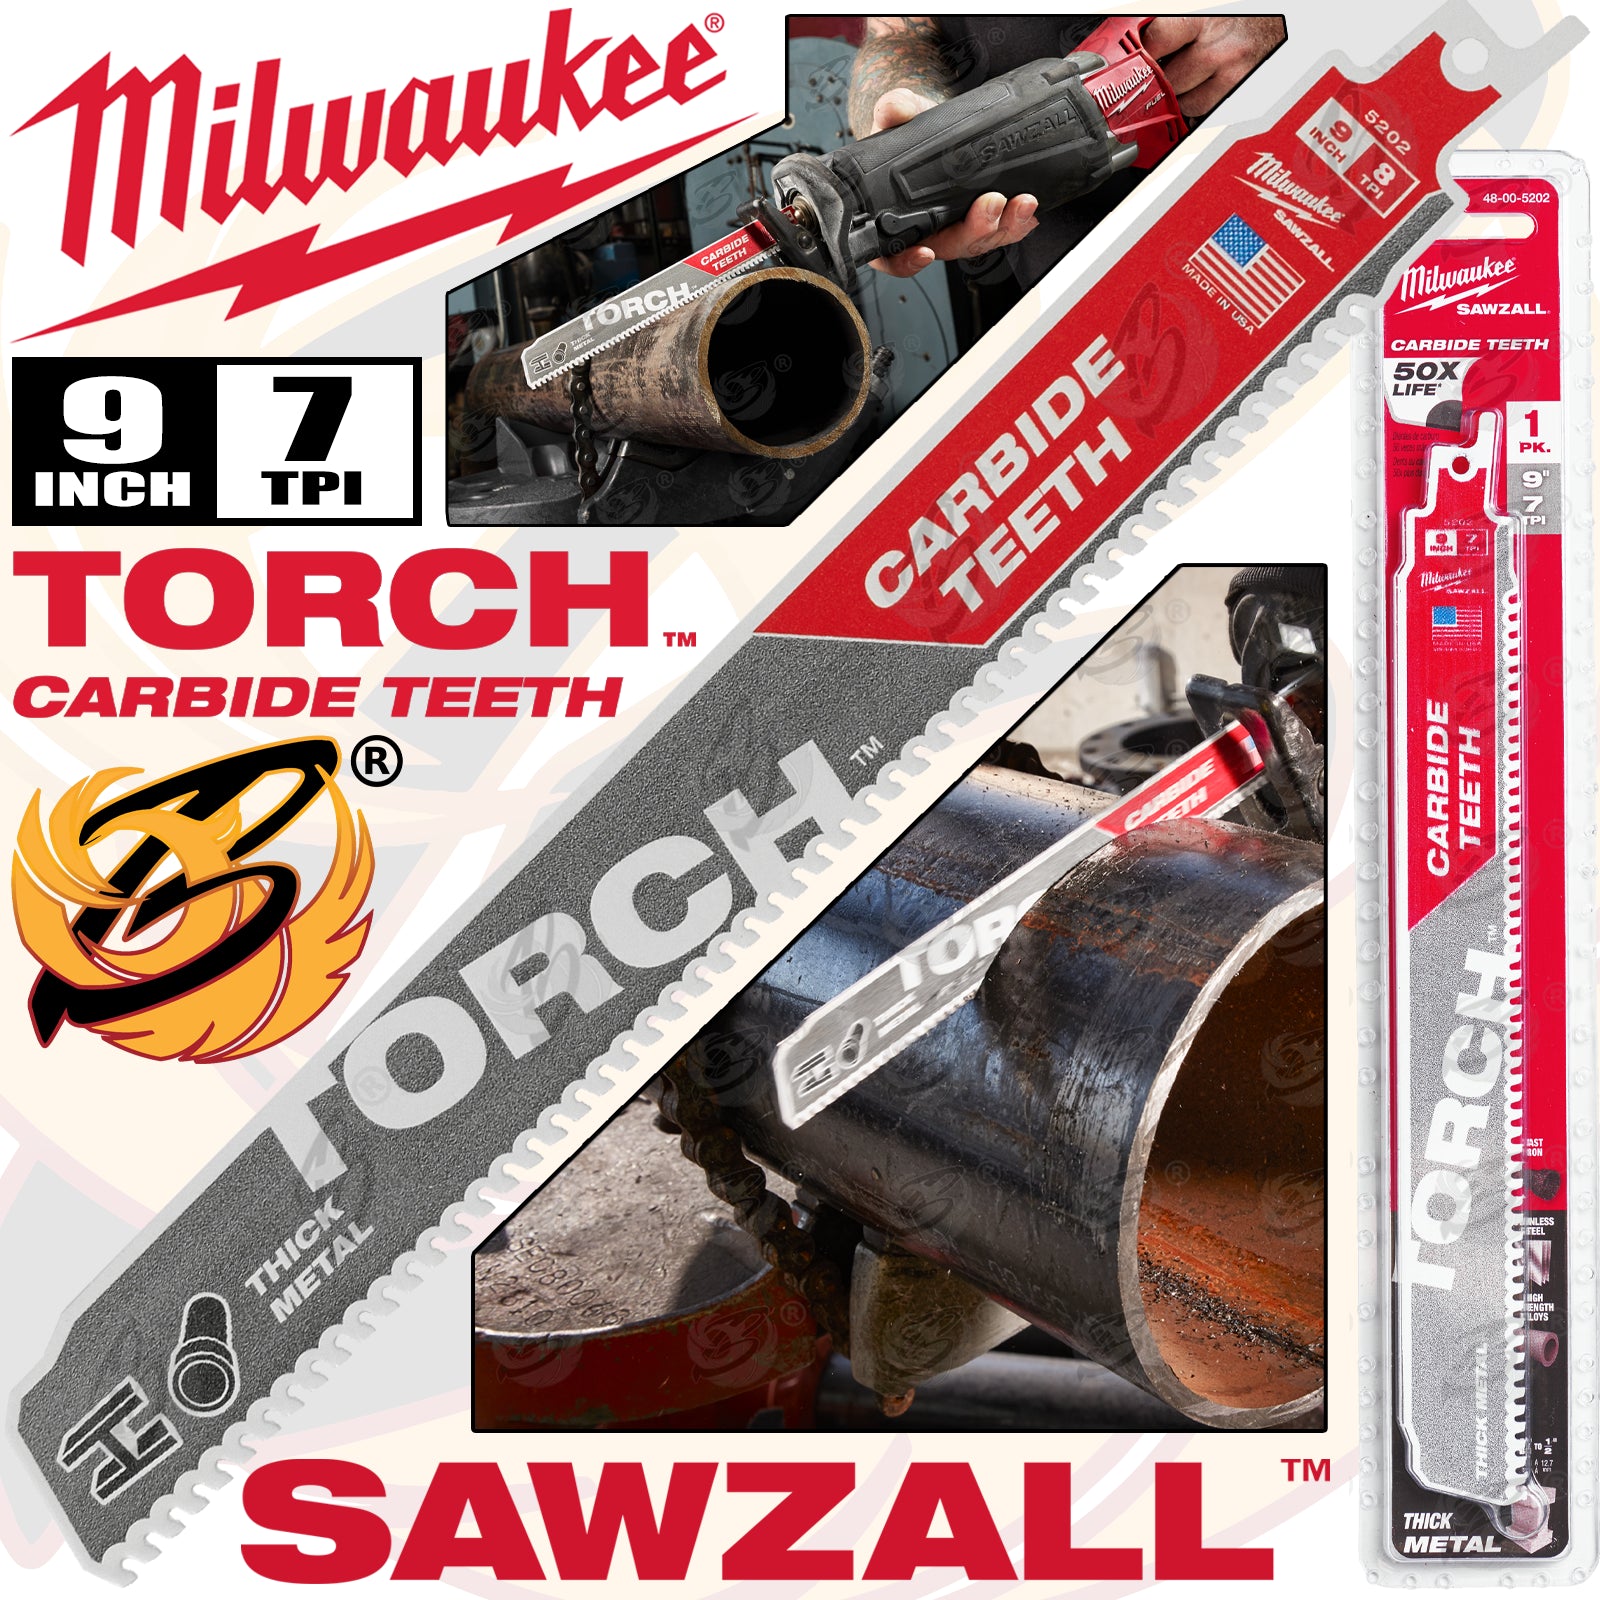 MILWAUKEE SAWZALL RECIPROCATING SAWBLADE 230mm x 8TPI TCT METAL SAW BLADES ( THE TORCH )